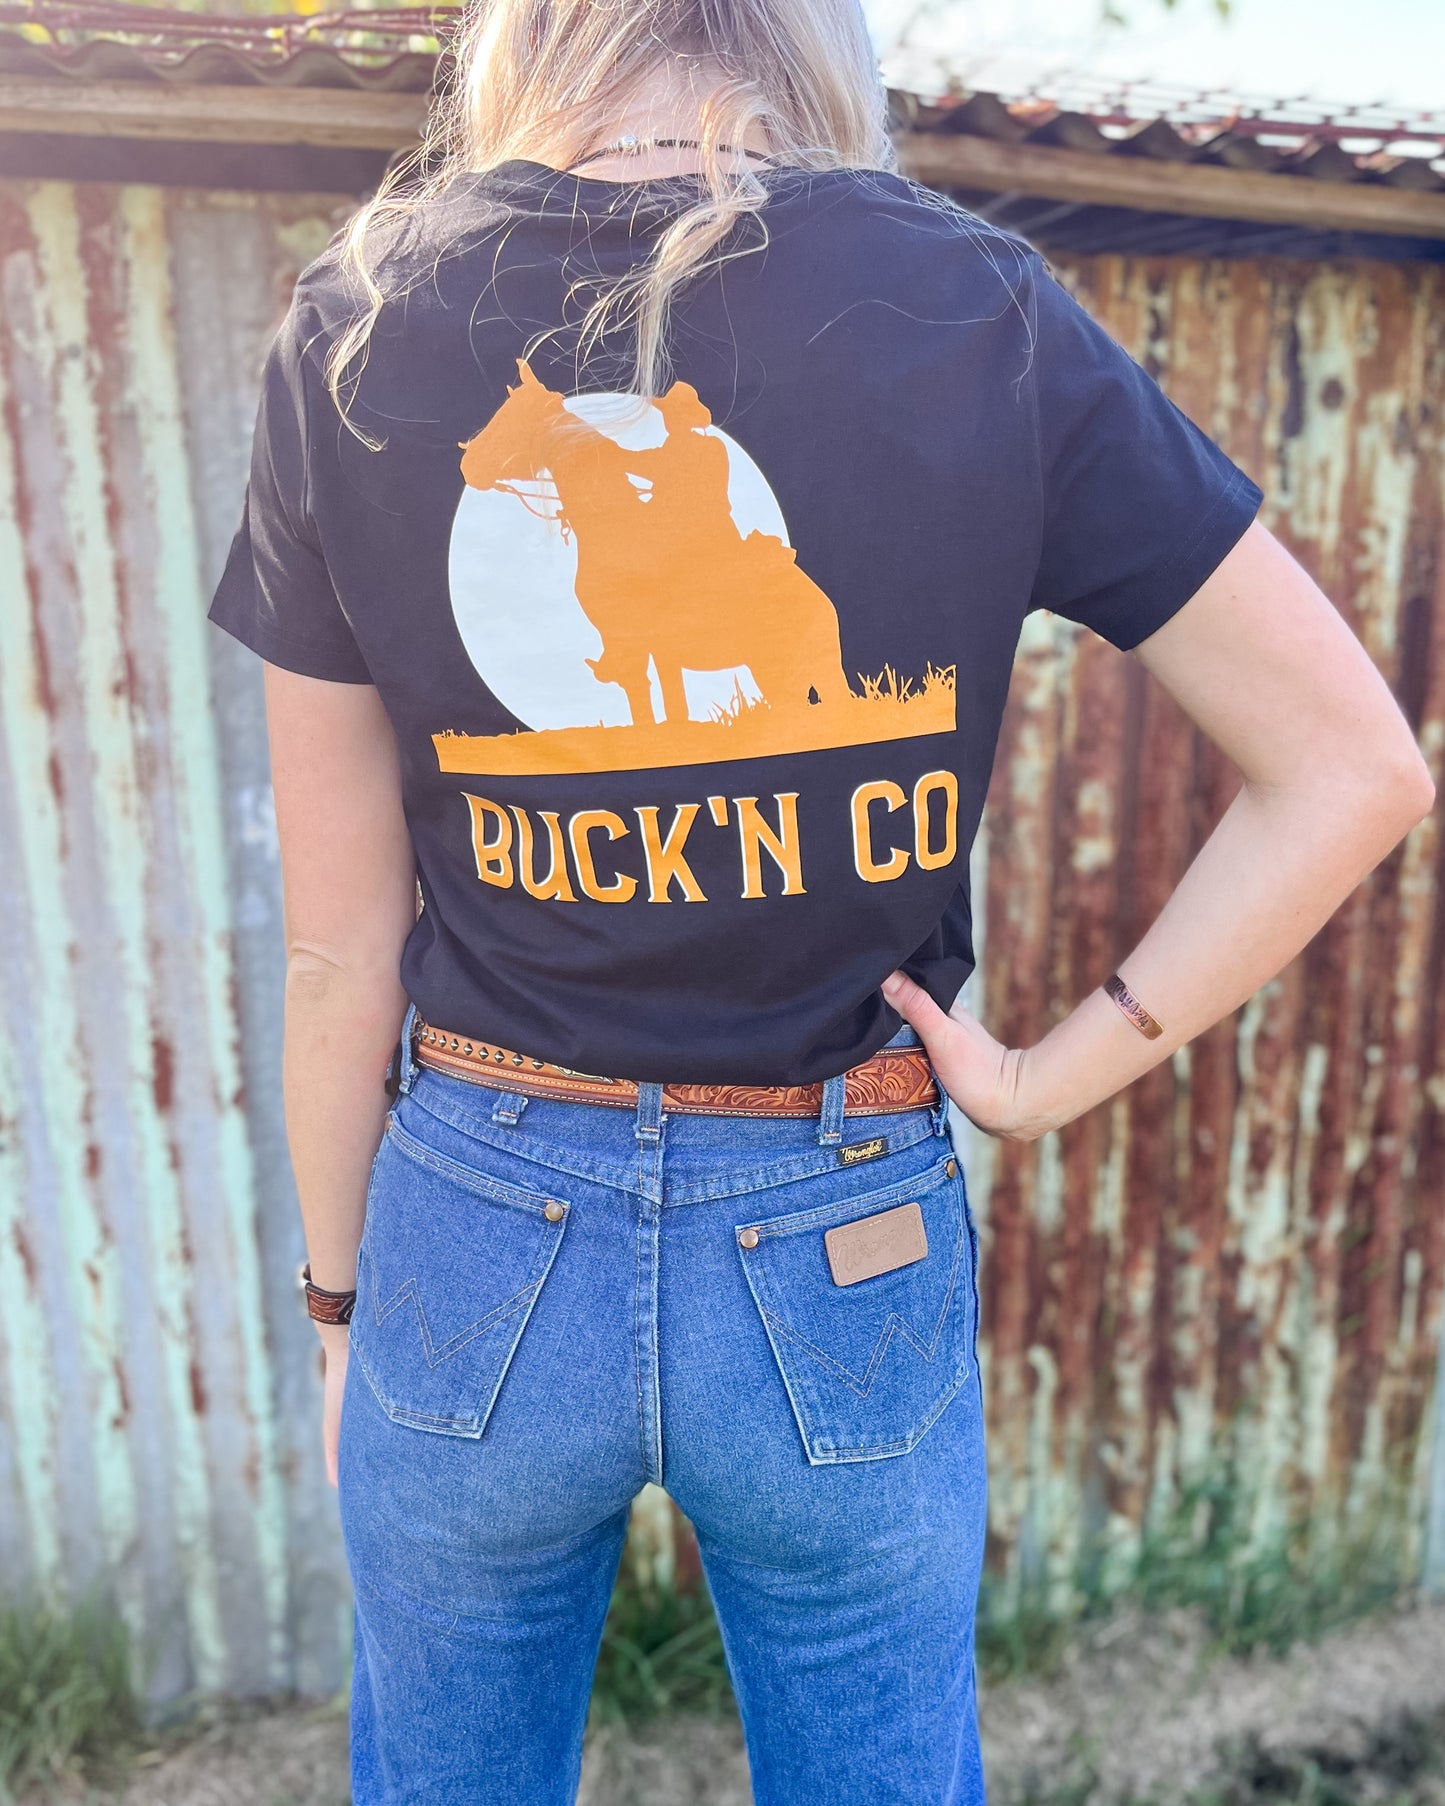 BUCK'N CO Unisex T Shirt - Black